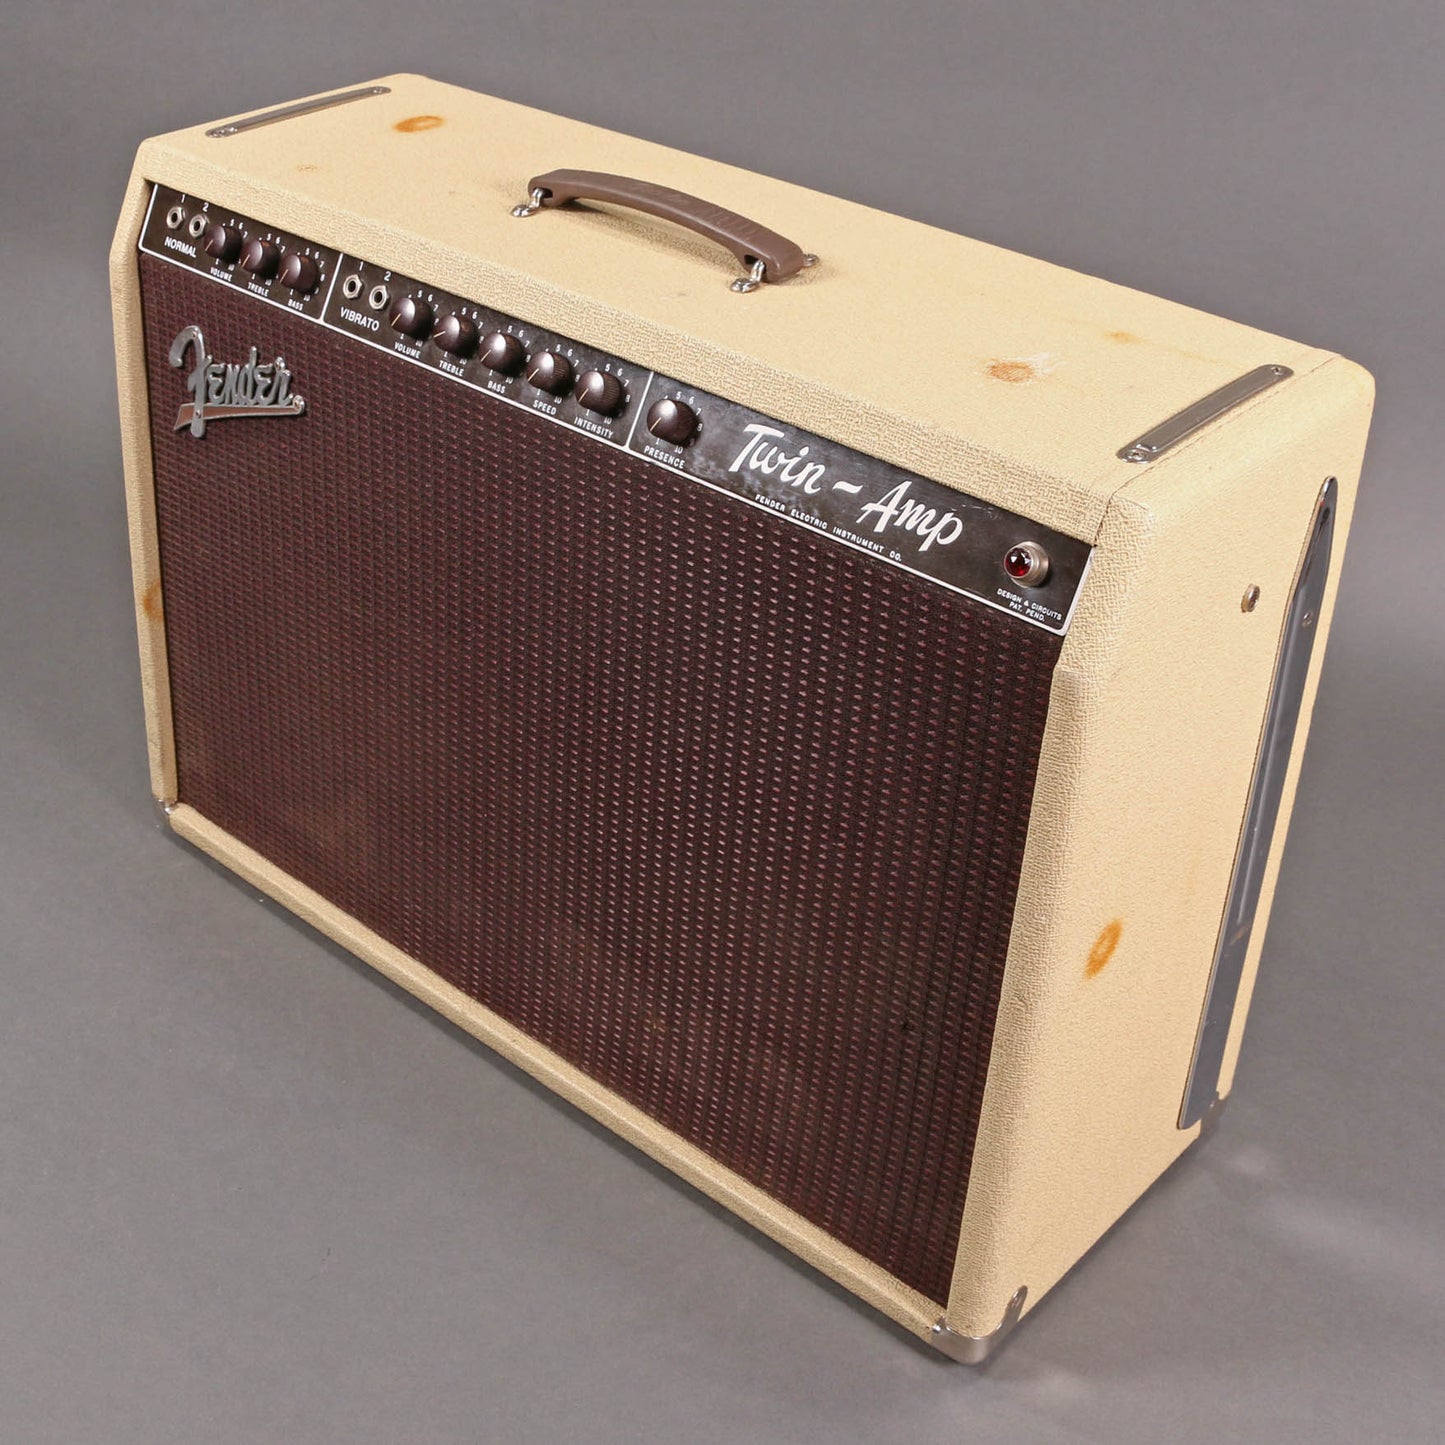 1960 Fender Twin Amp 6G8